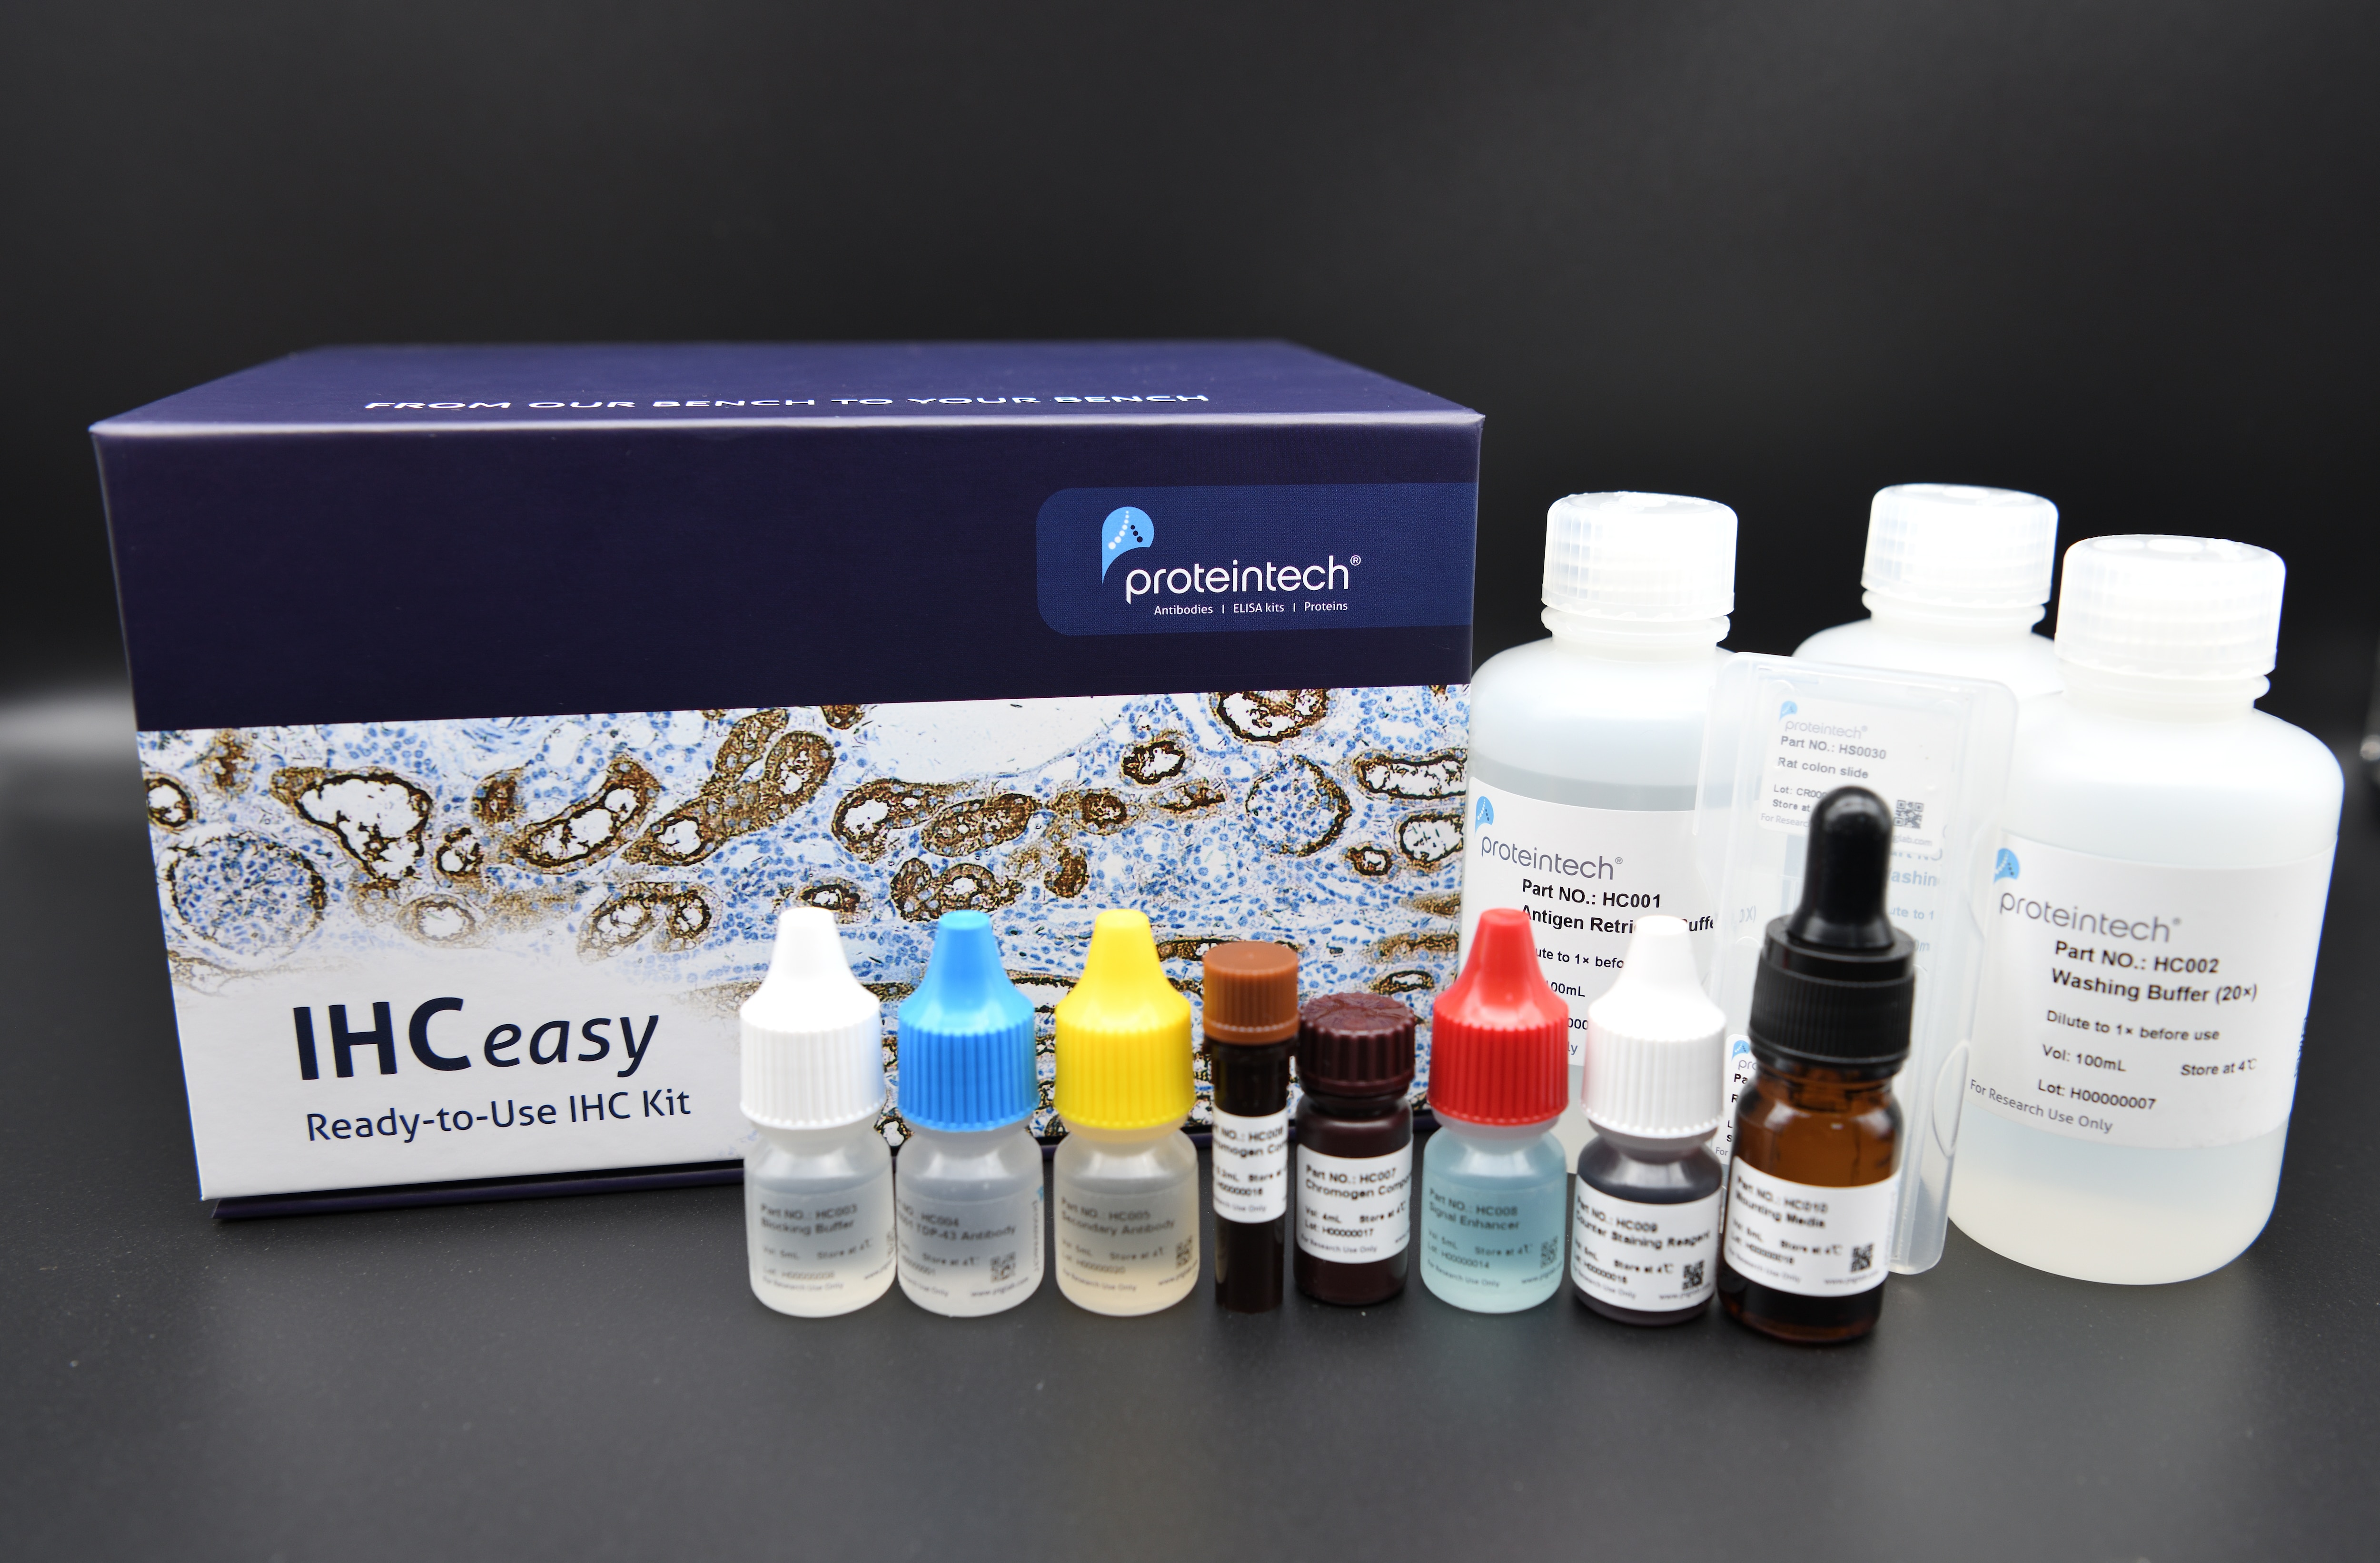 Proteintech IHCeasy kit product image